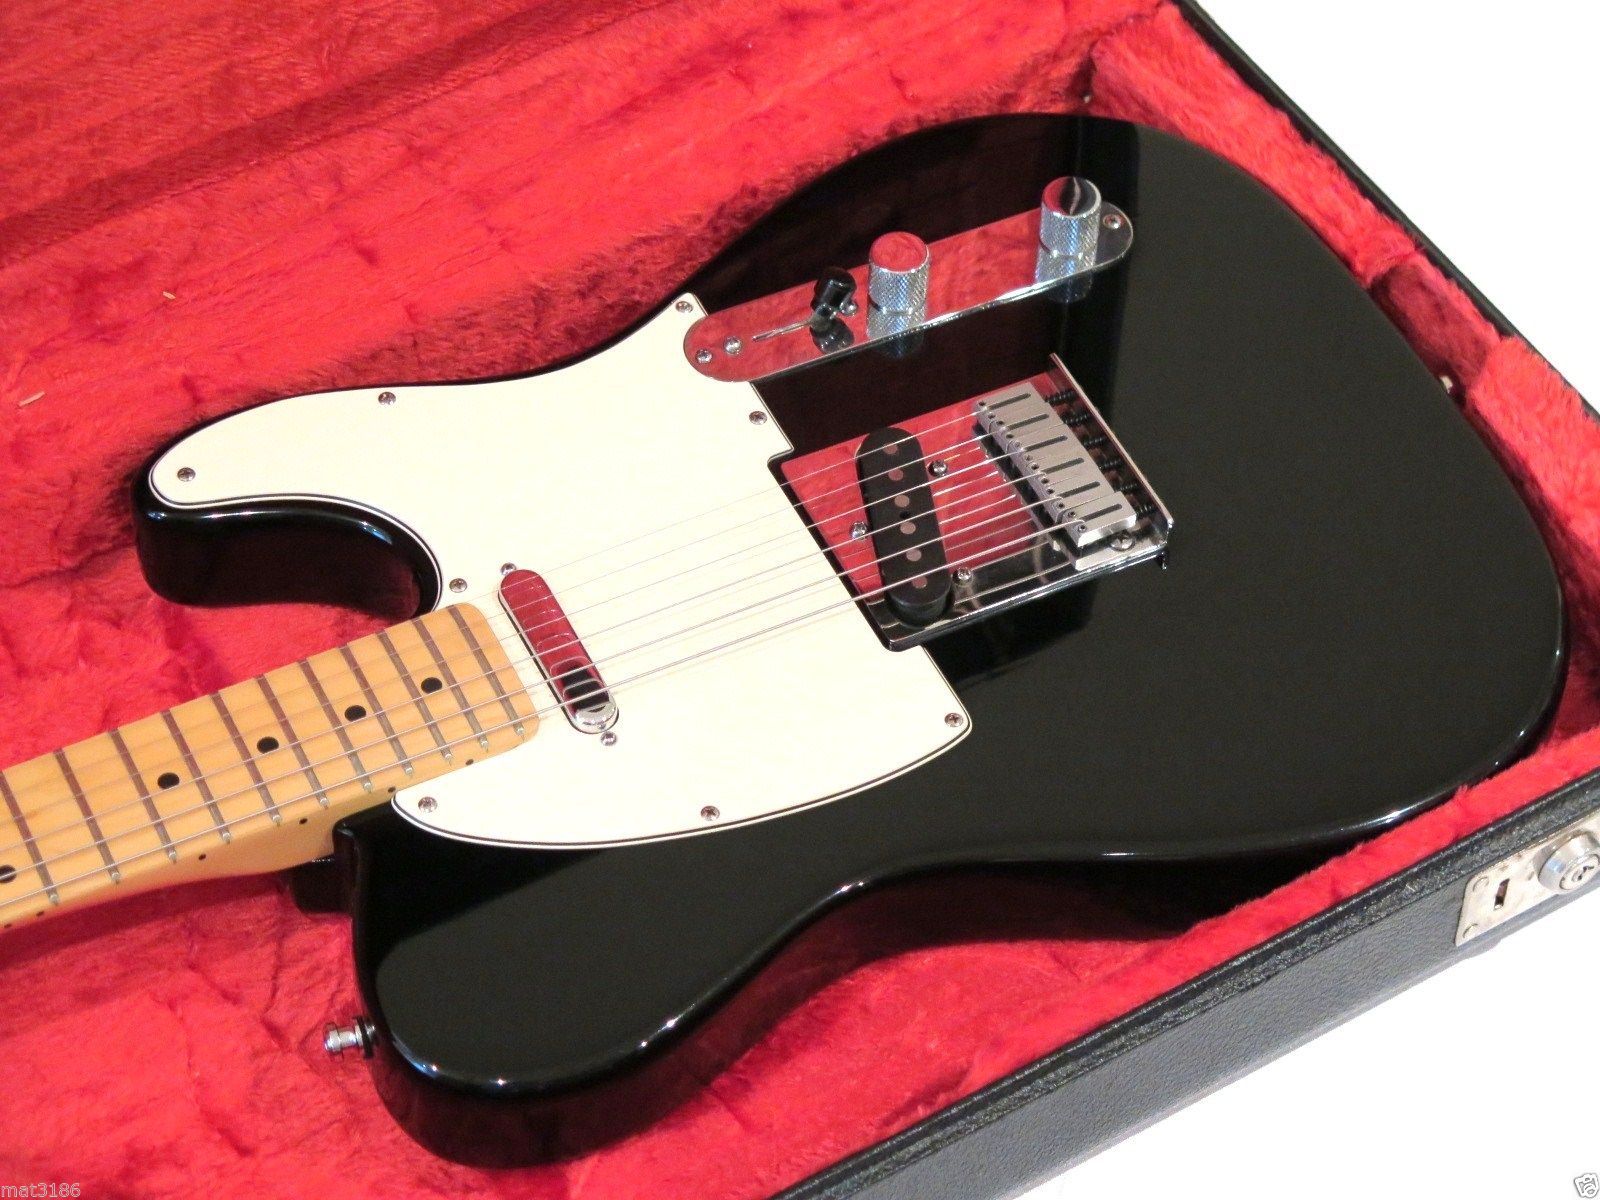 Fender telecaster guitar